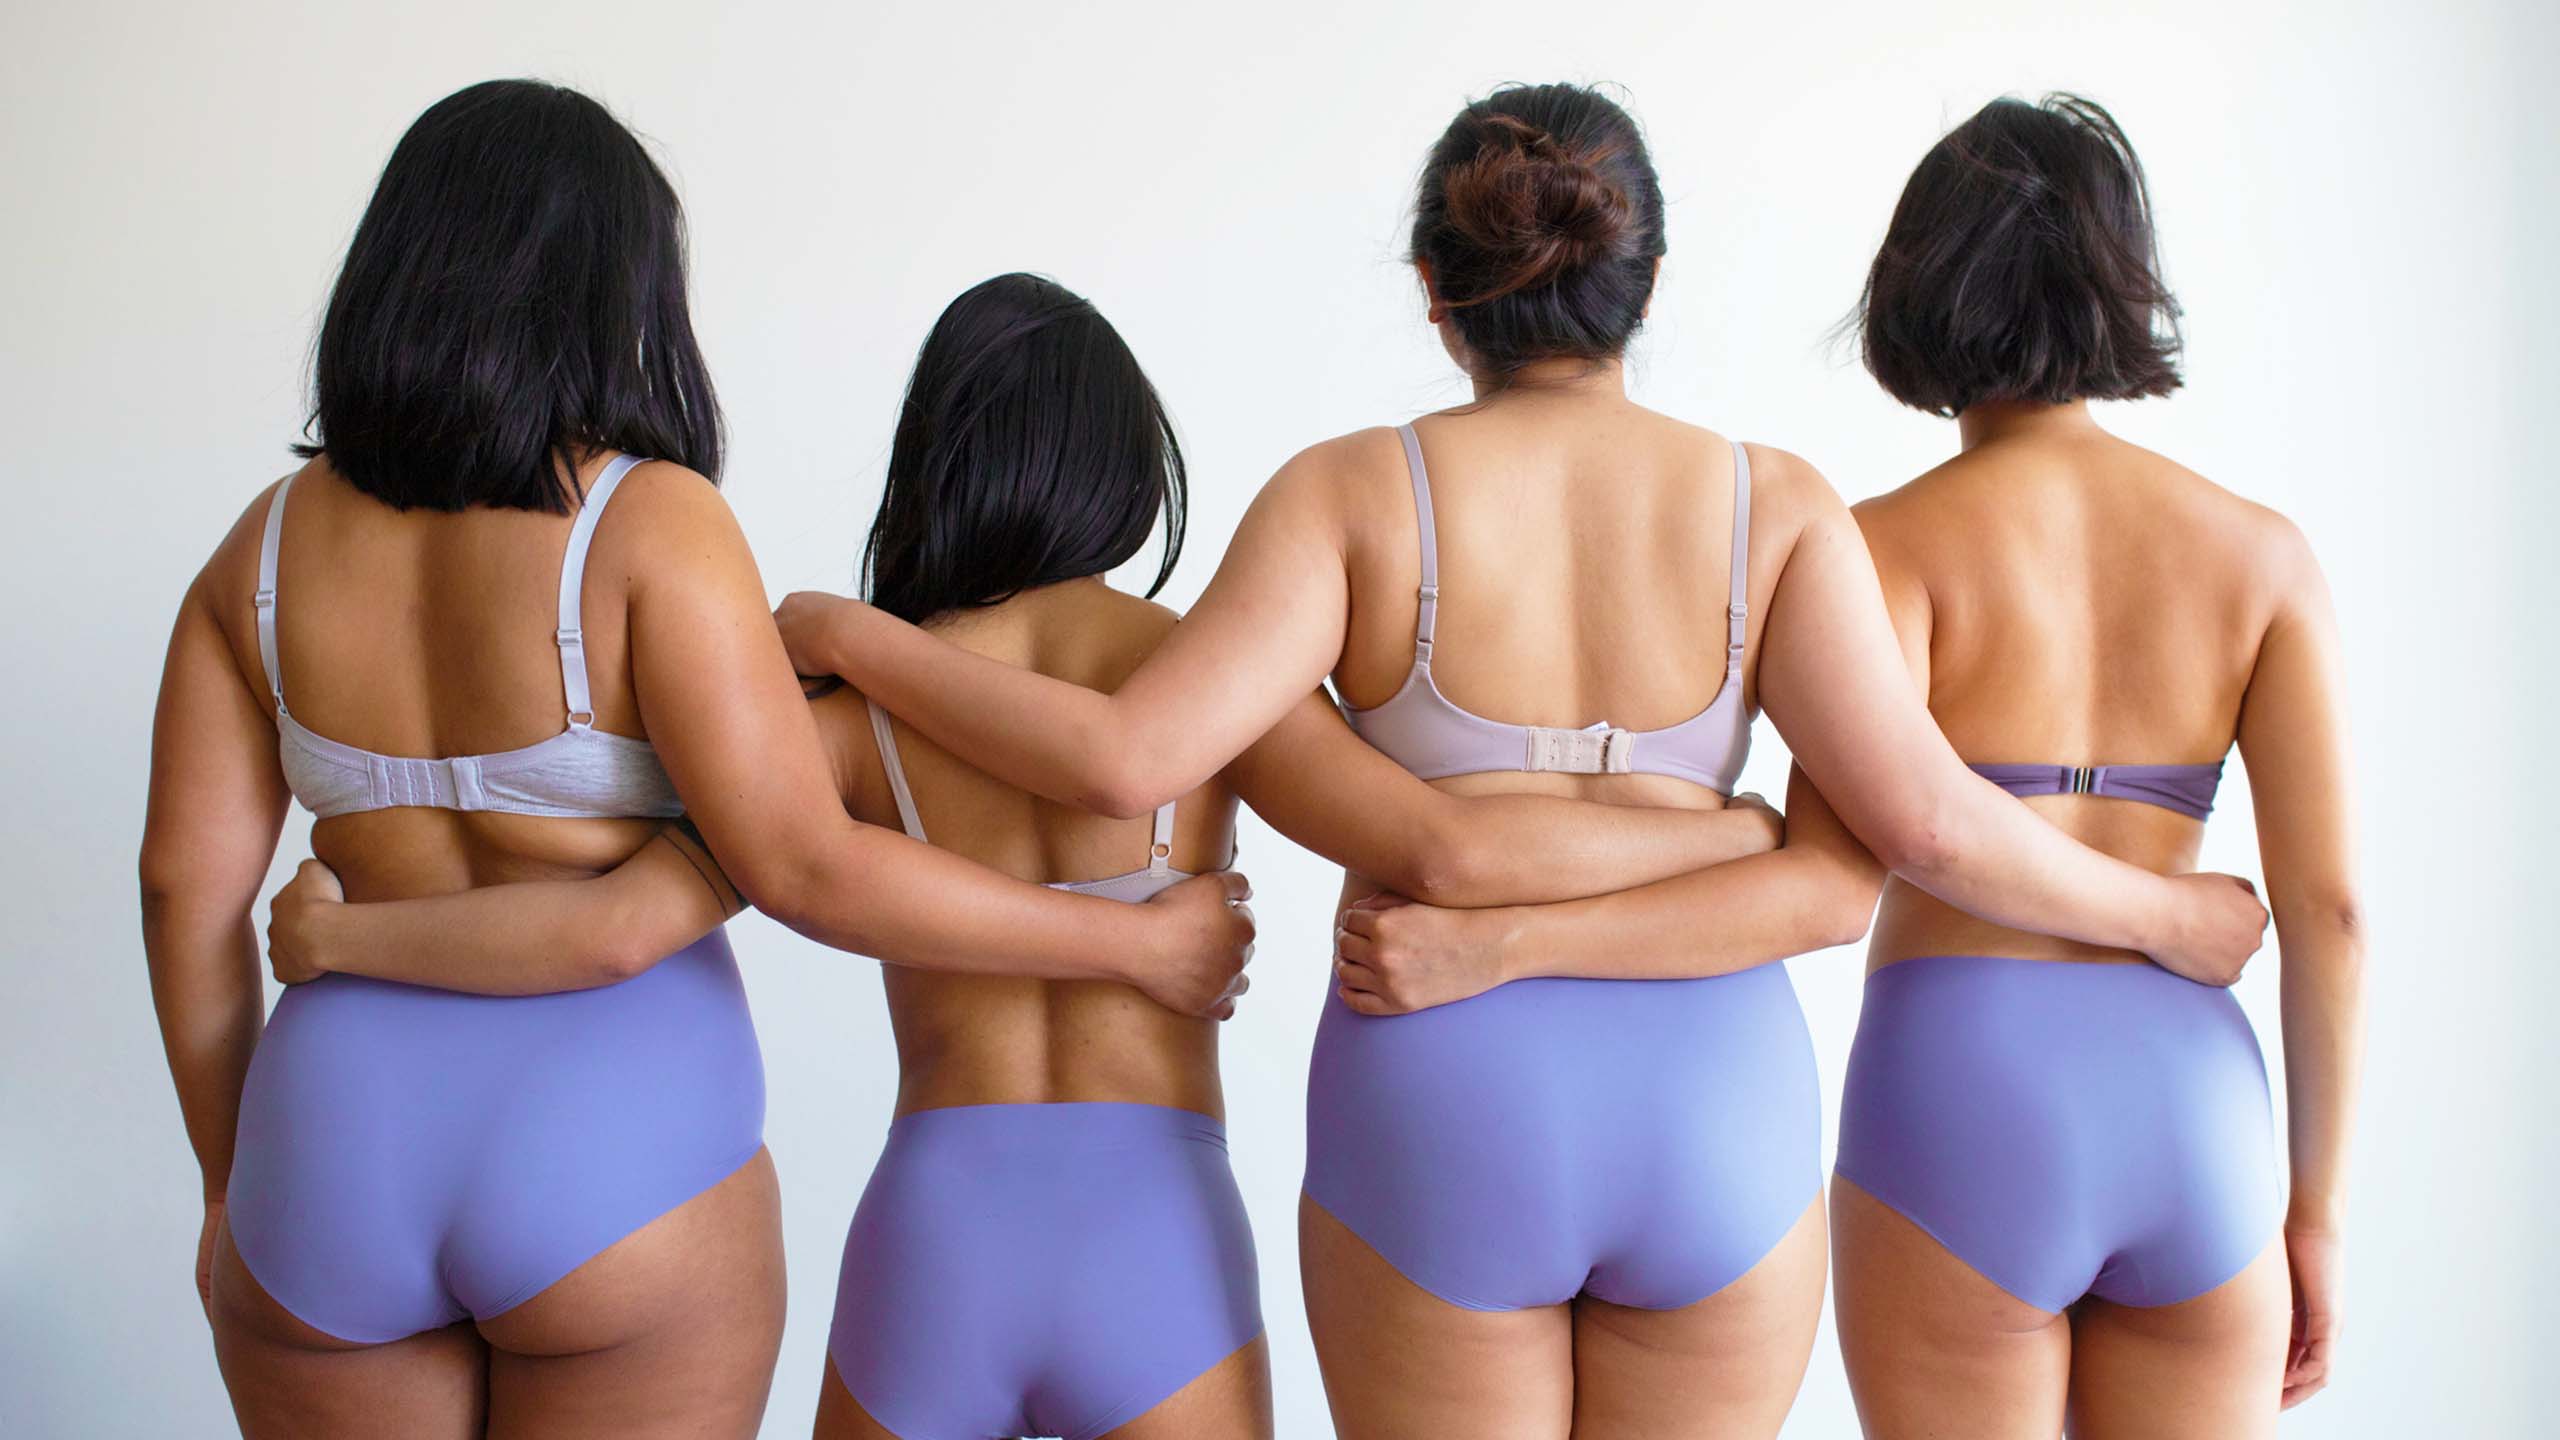 Lifestyle photo of diverse women for femtech brand Nala